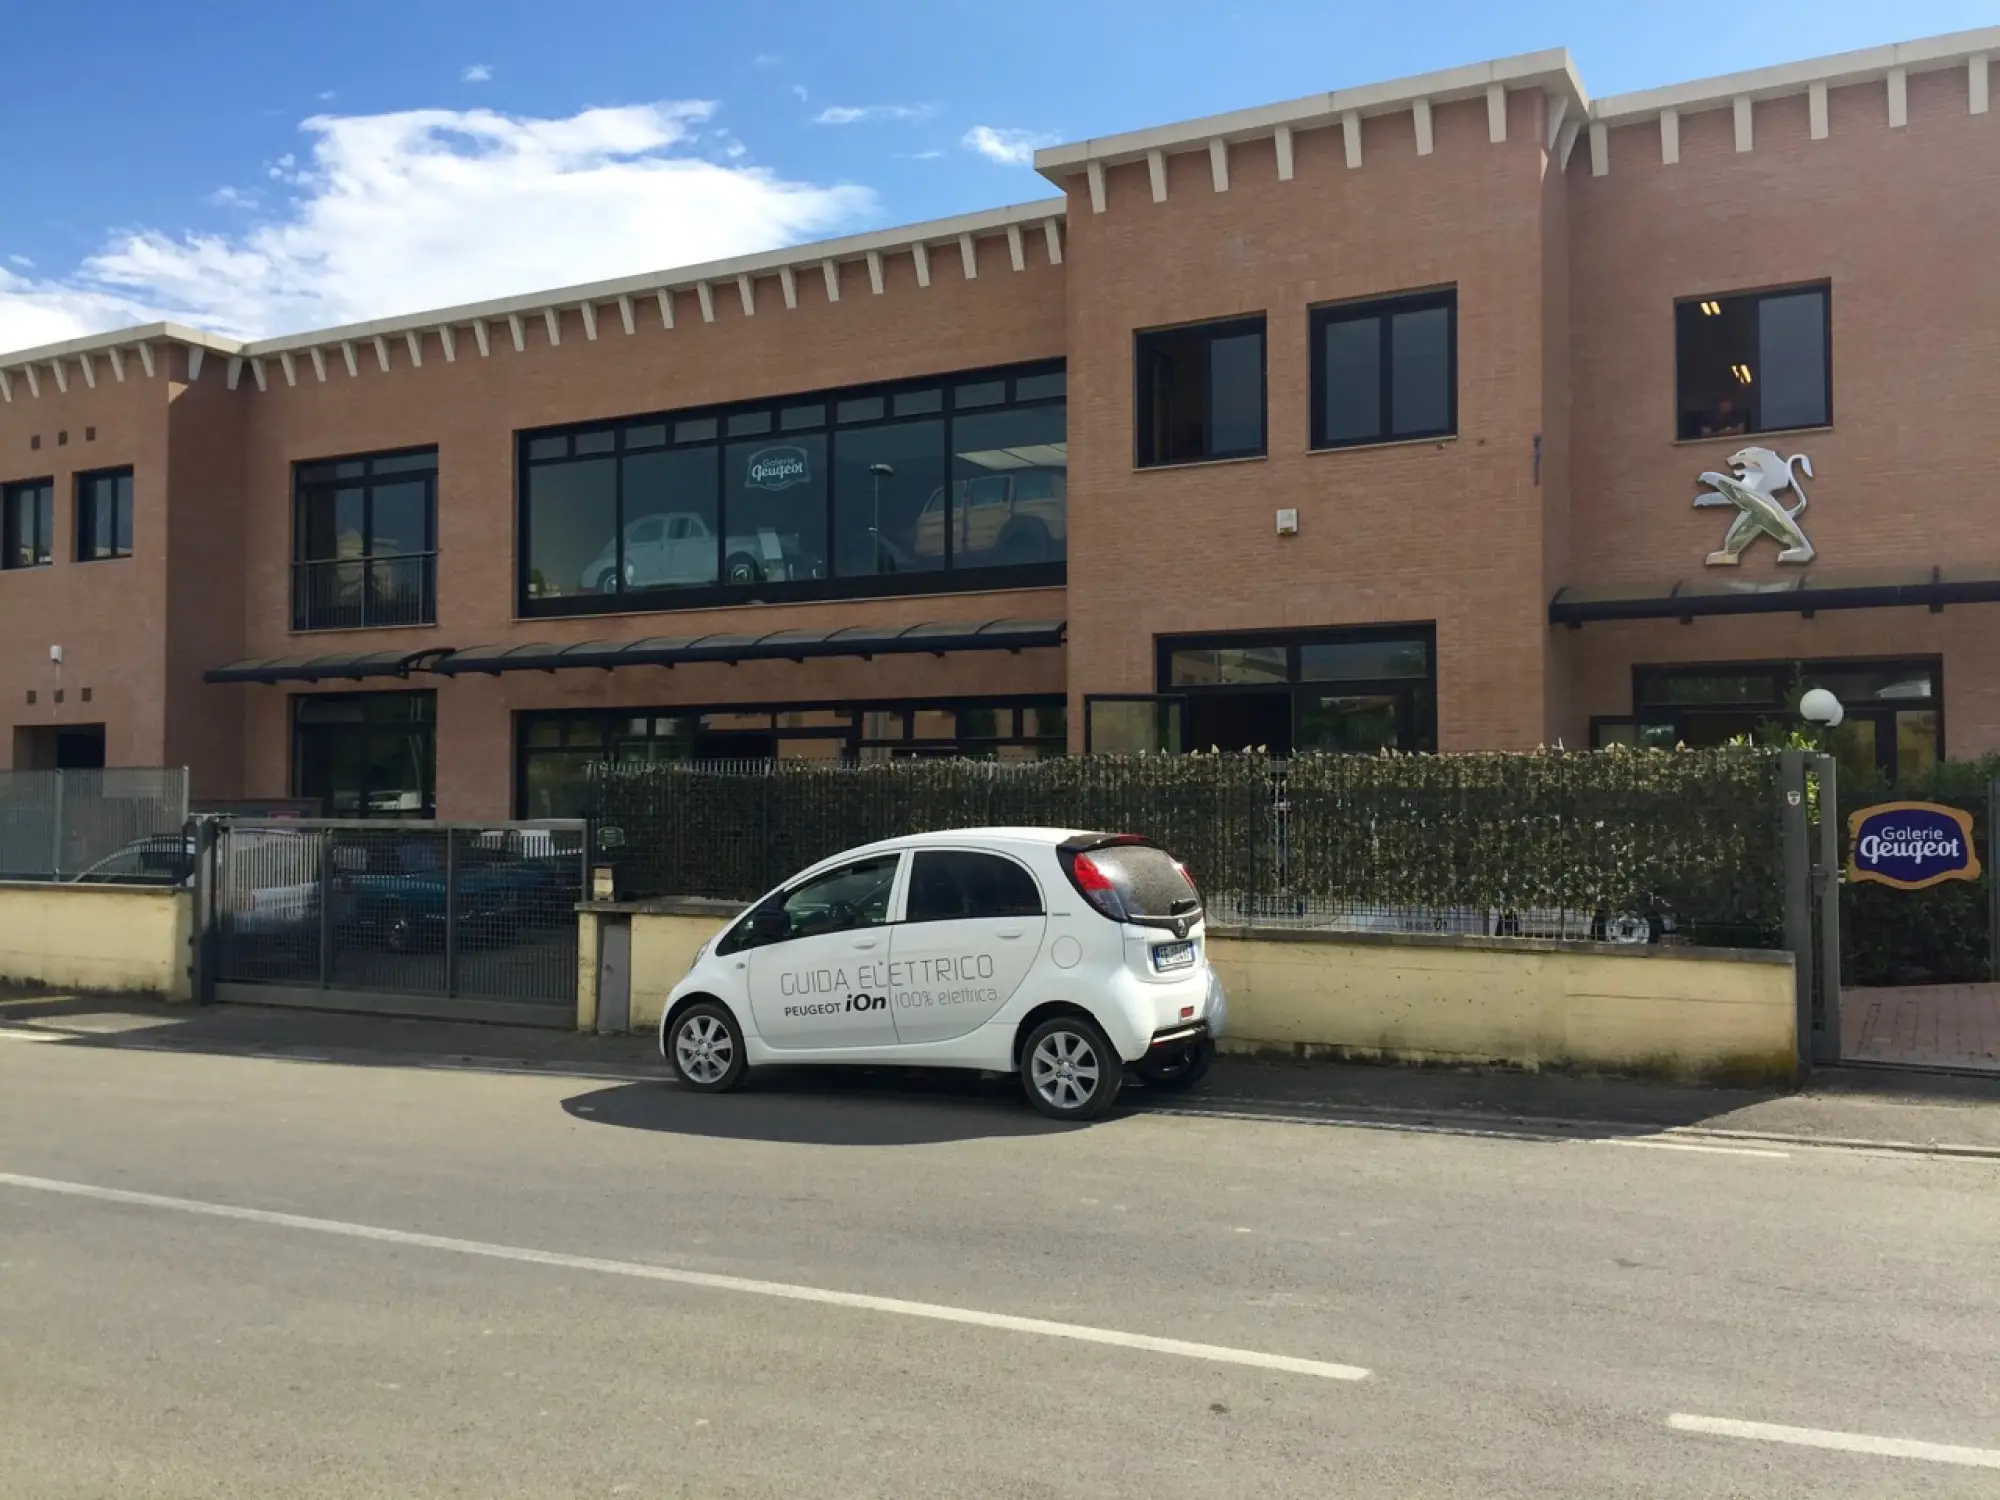 Galerie Peugeot di San Gimignano - evento 2016 - 27